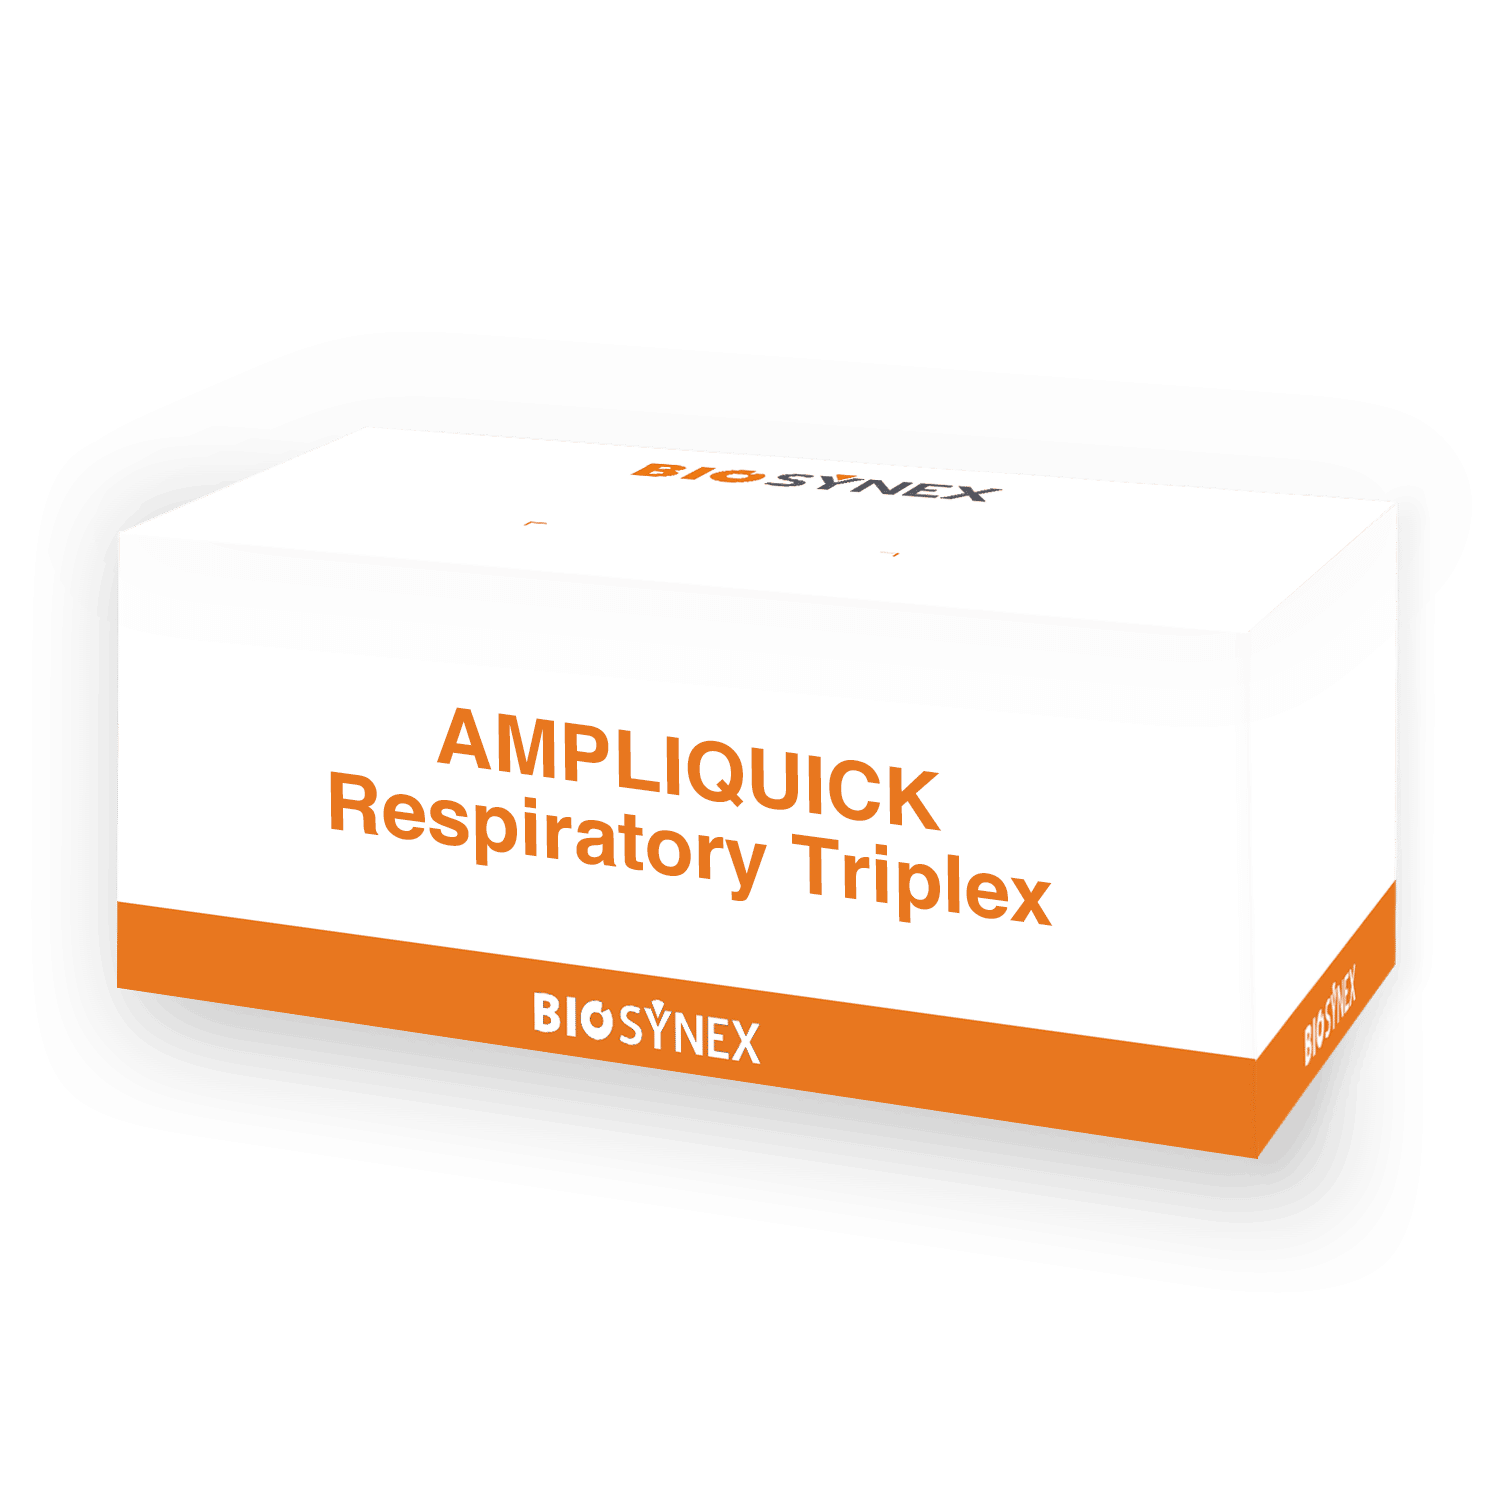 AMPLIQUICK respiratory Triplex biosynex diagnostic